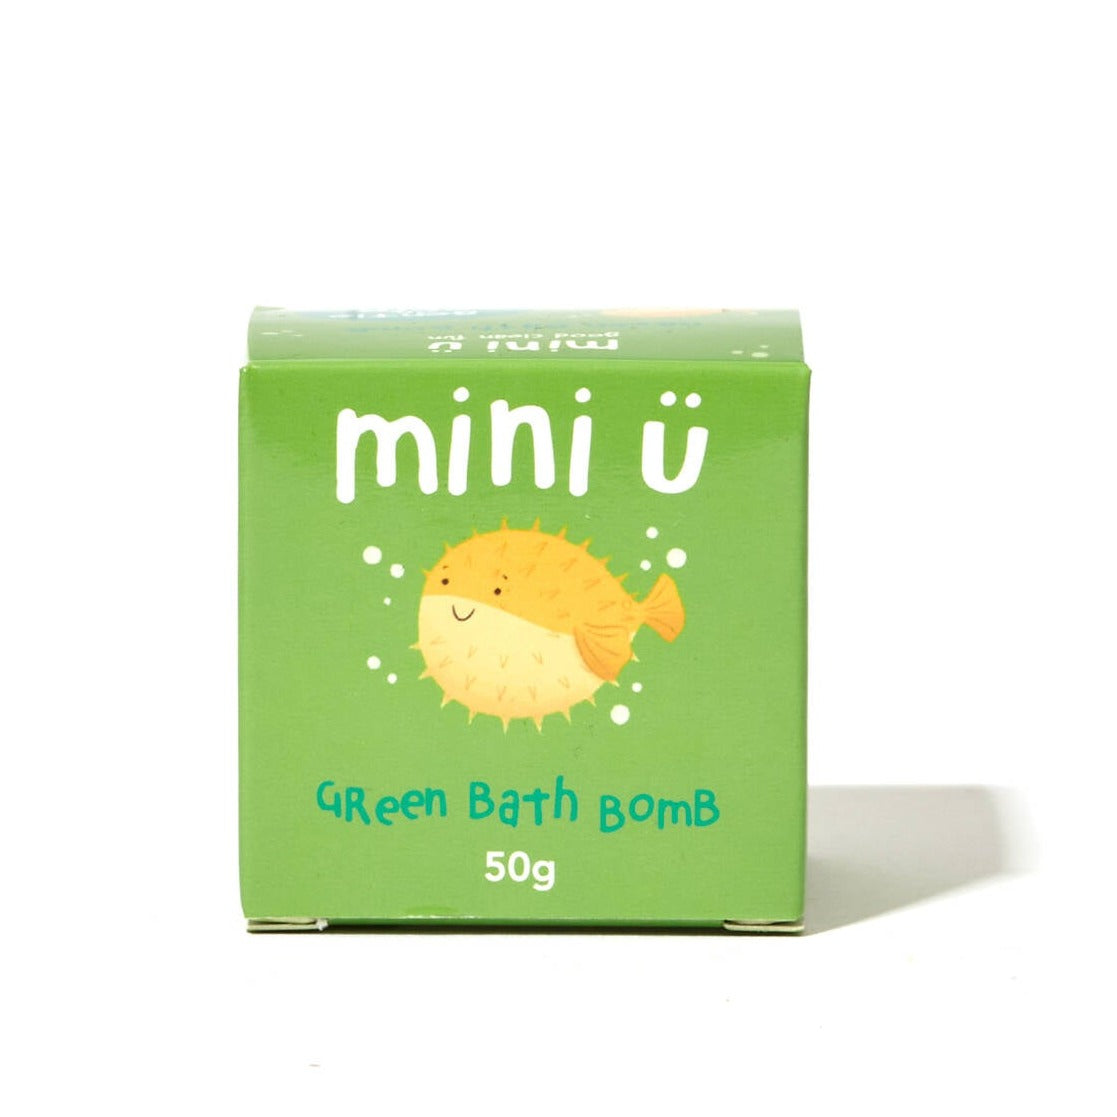 Mini U: Musogah for bathing with a surprise Green Bath bomb